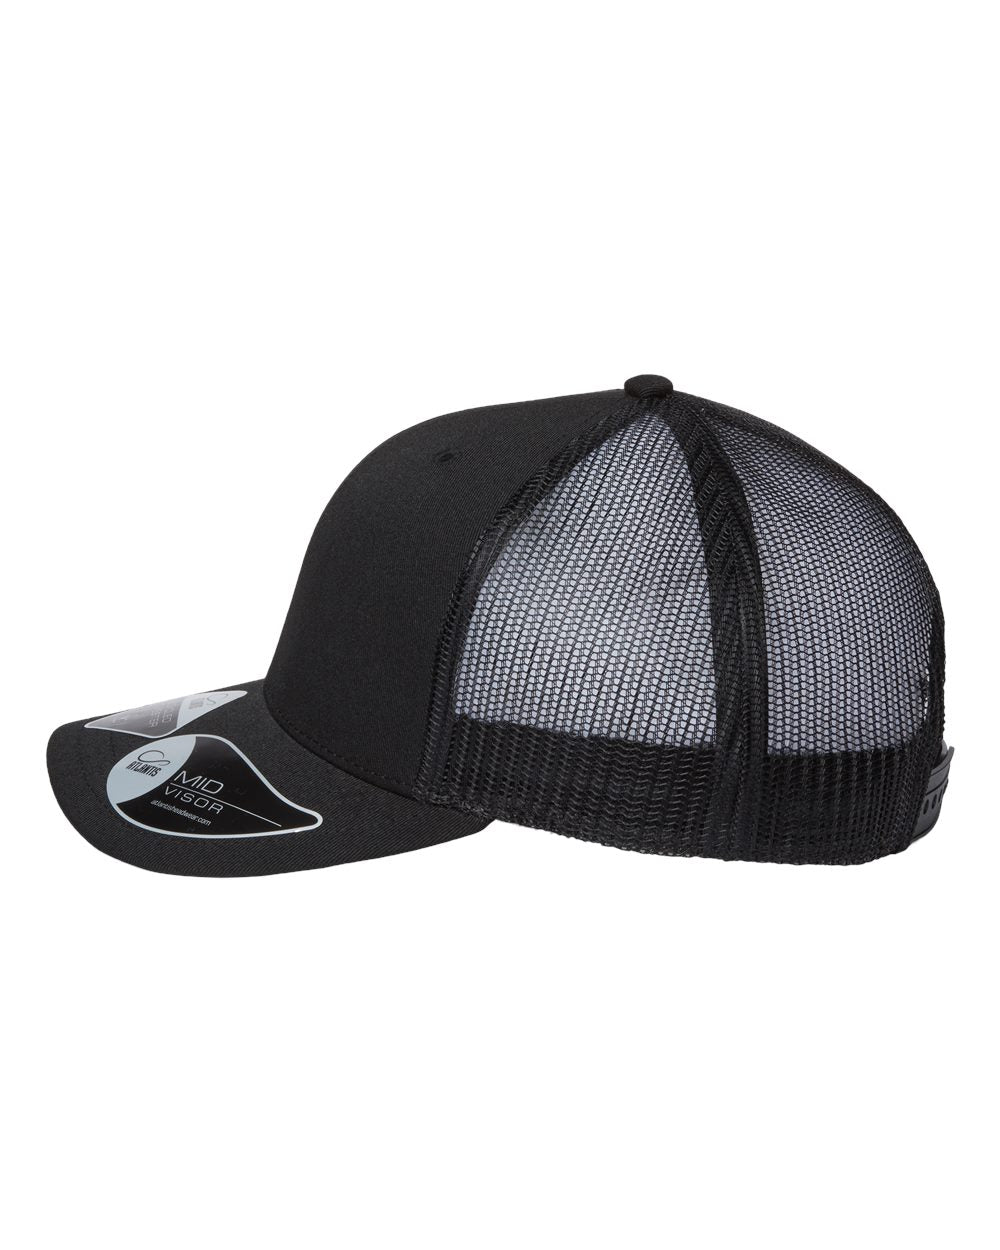 Customizable Atlantis Headwear Bryce Trucker Cap in black